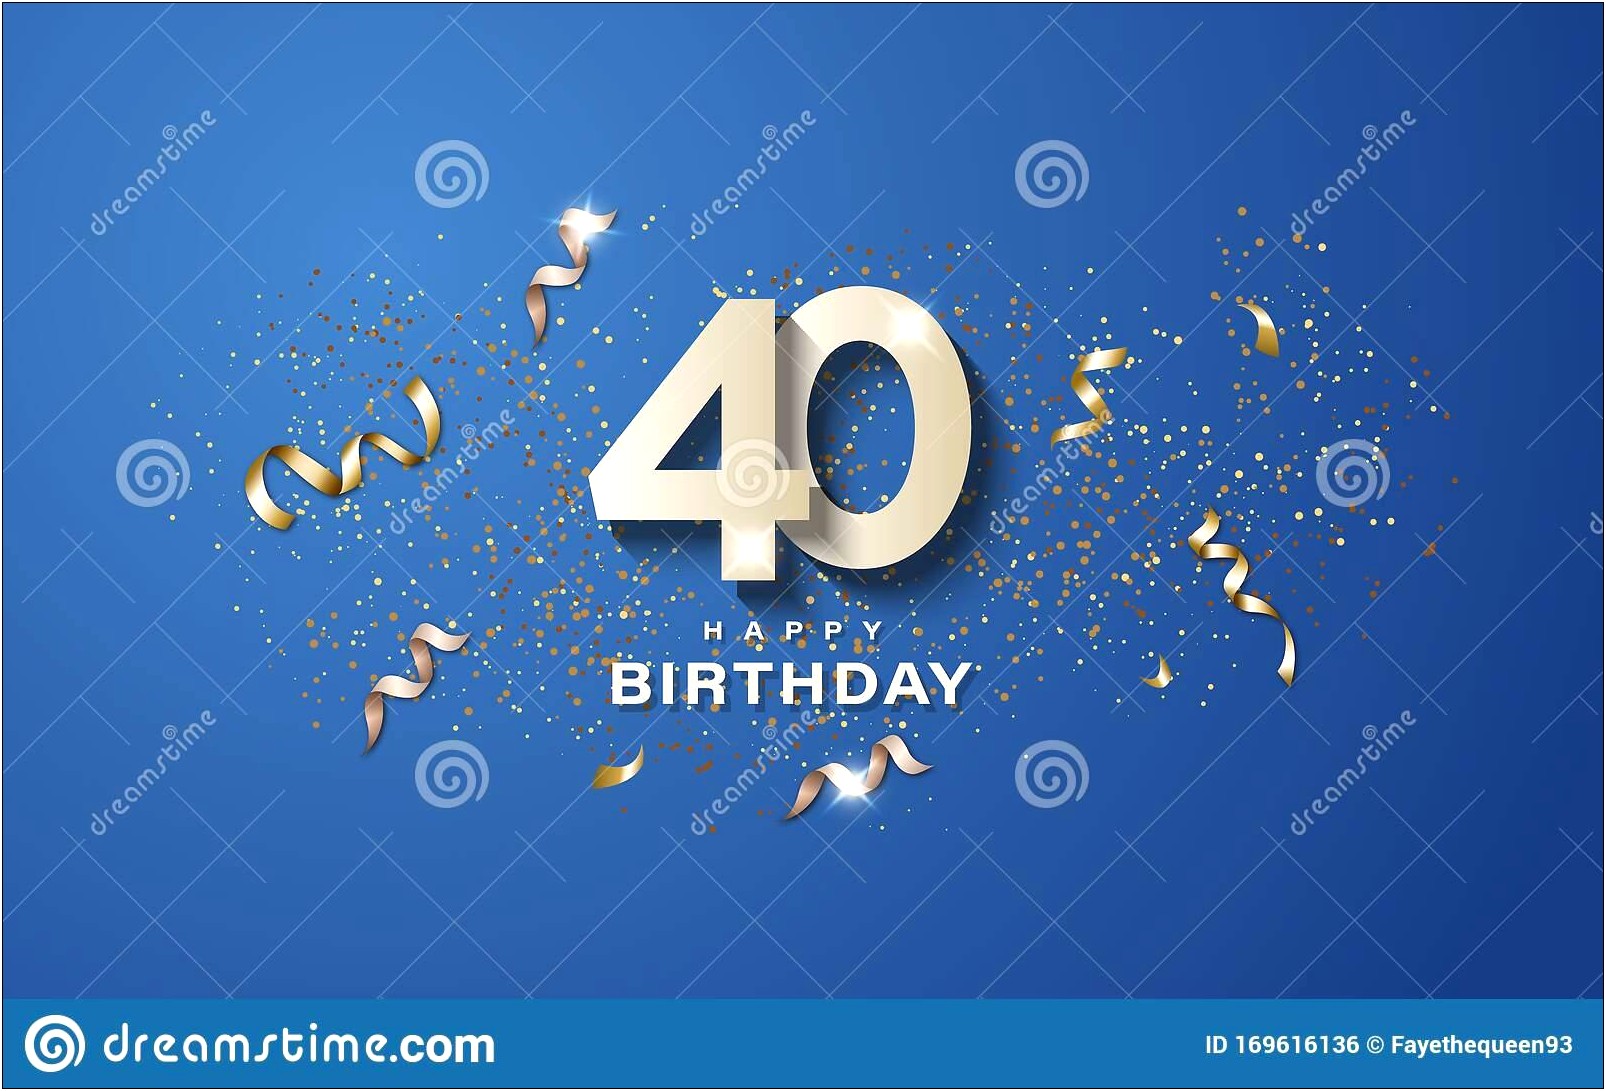 Free Happy 40th Birthday Banner Templates